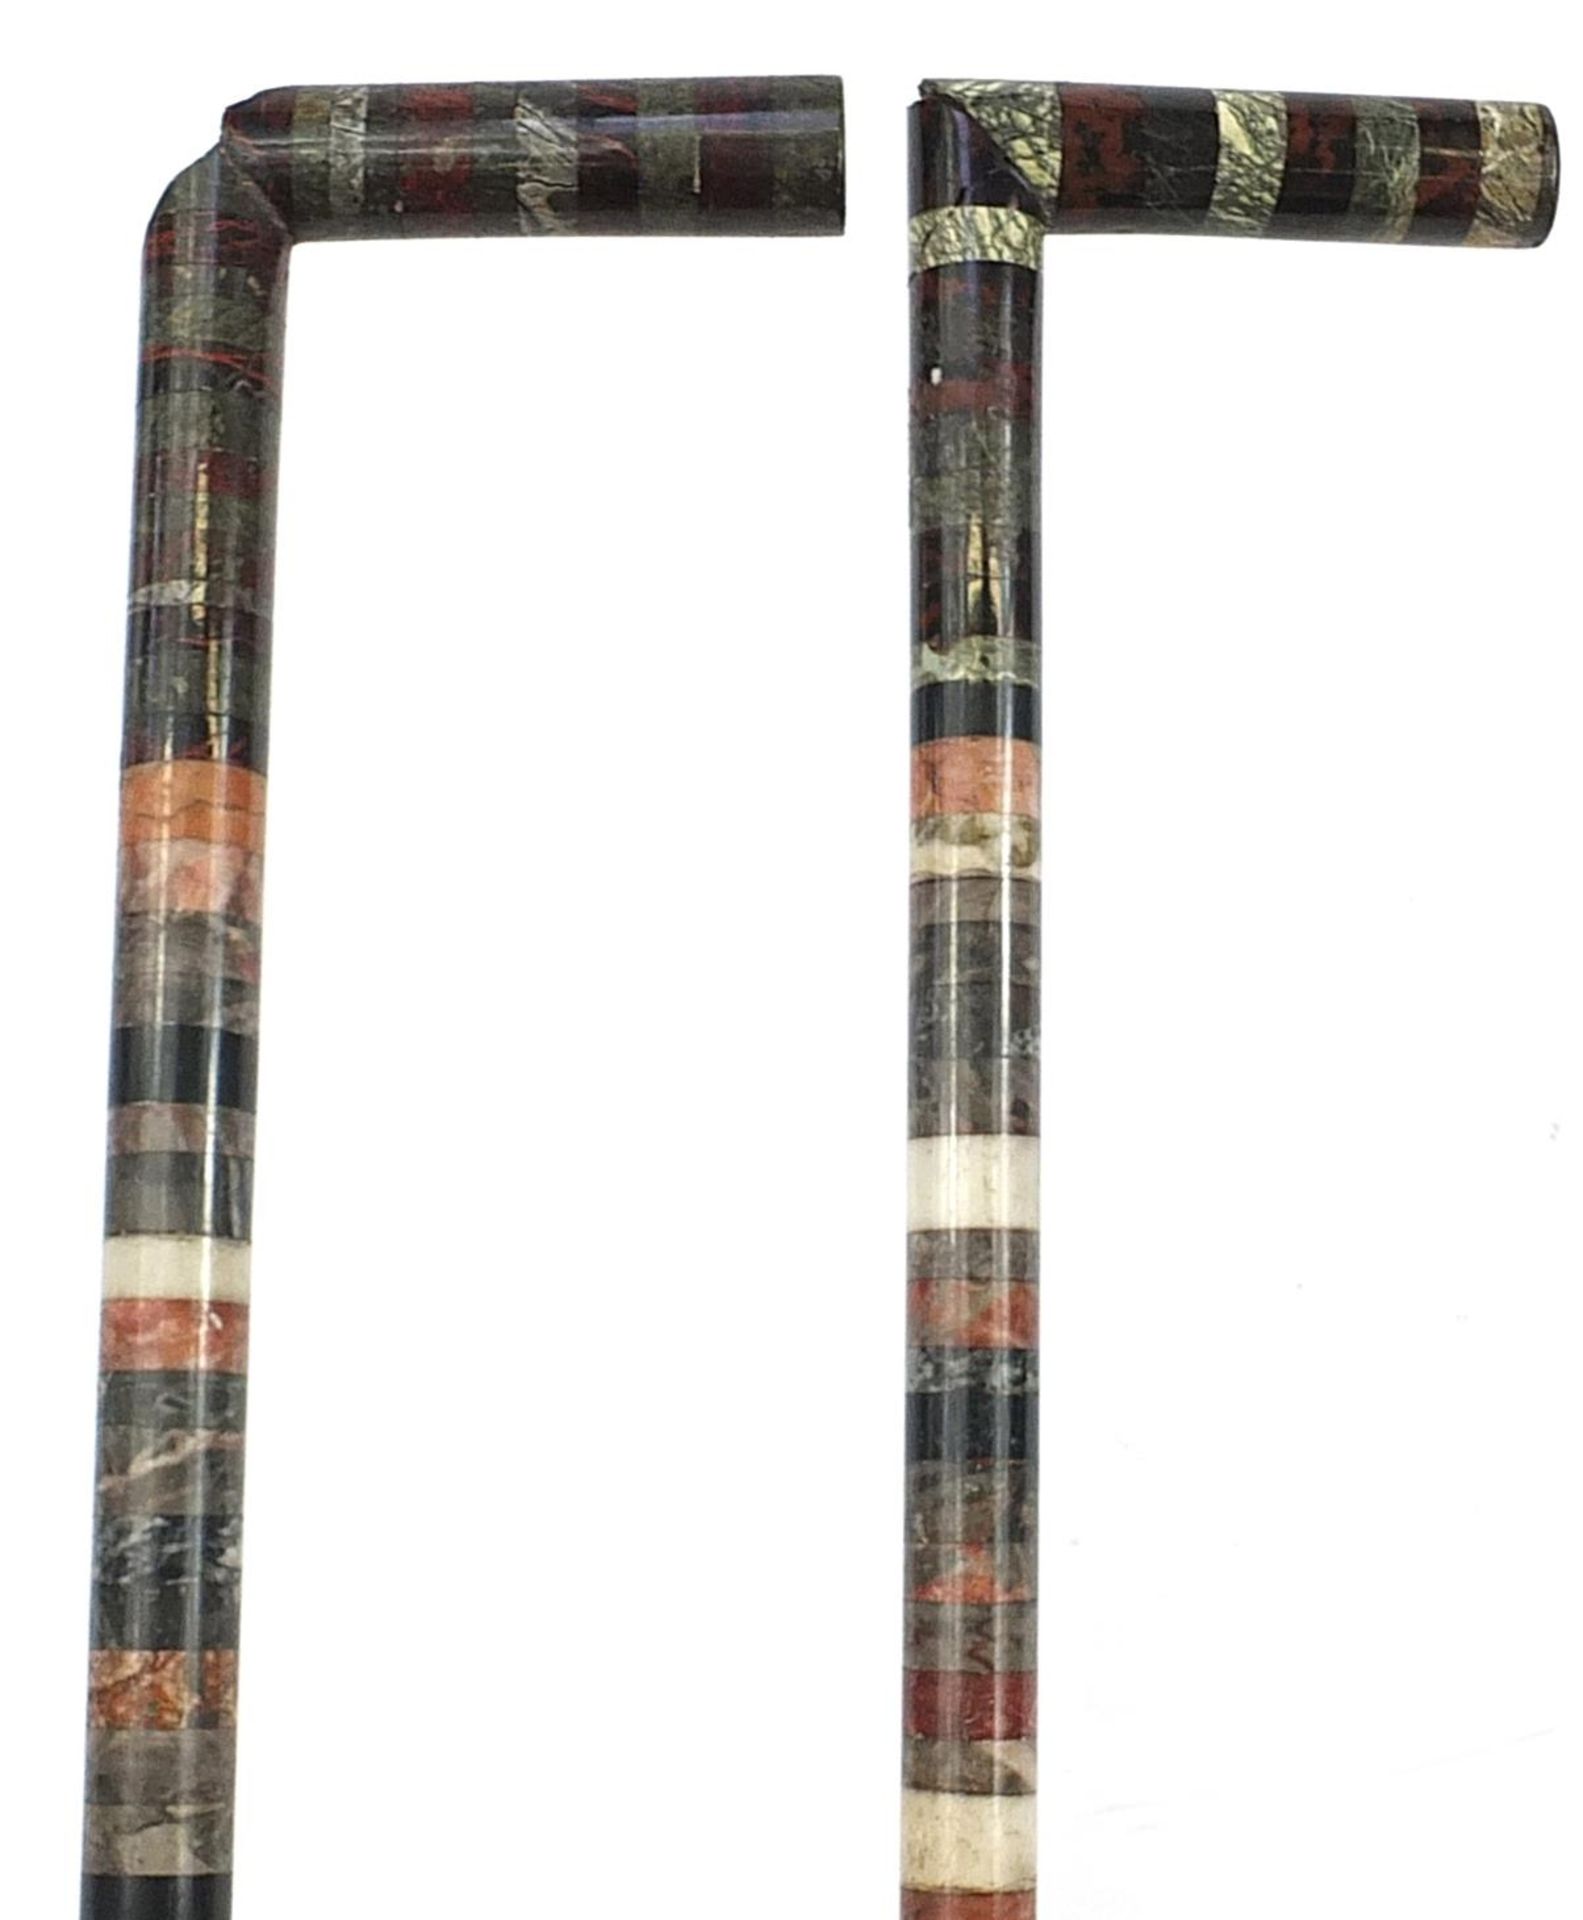 Pair of specimen marble sectional walking sticks, each 89.5cm in length